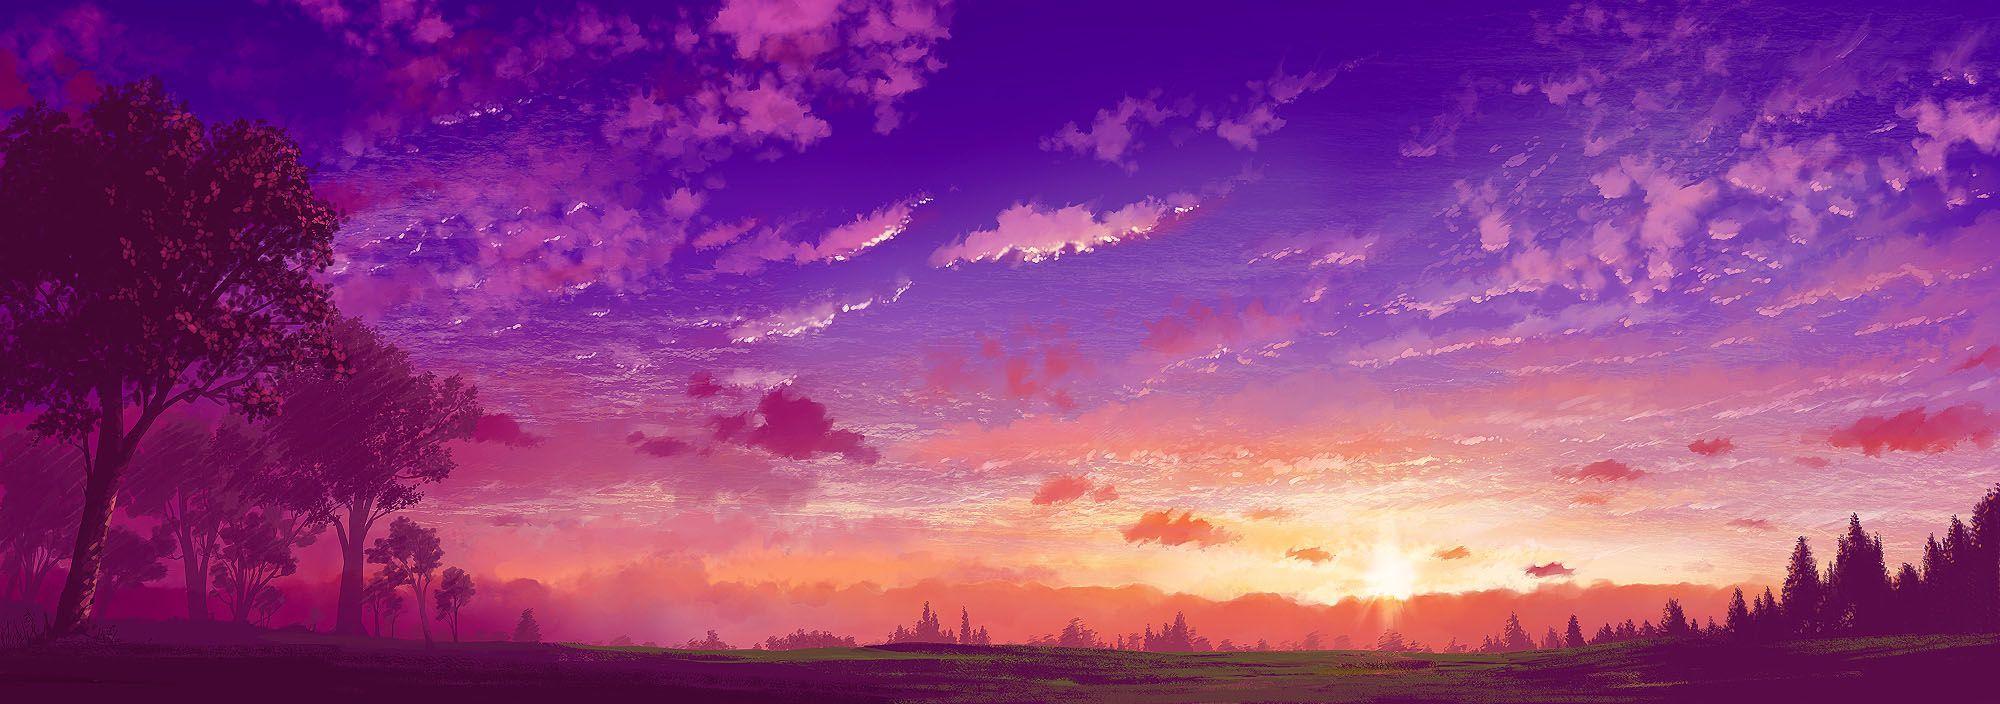 Purple Anime Wallpapers on WallpaperDog